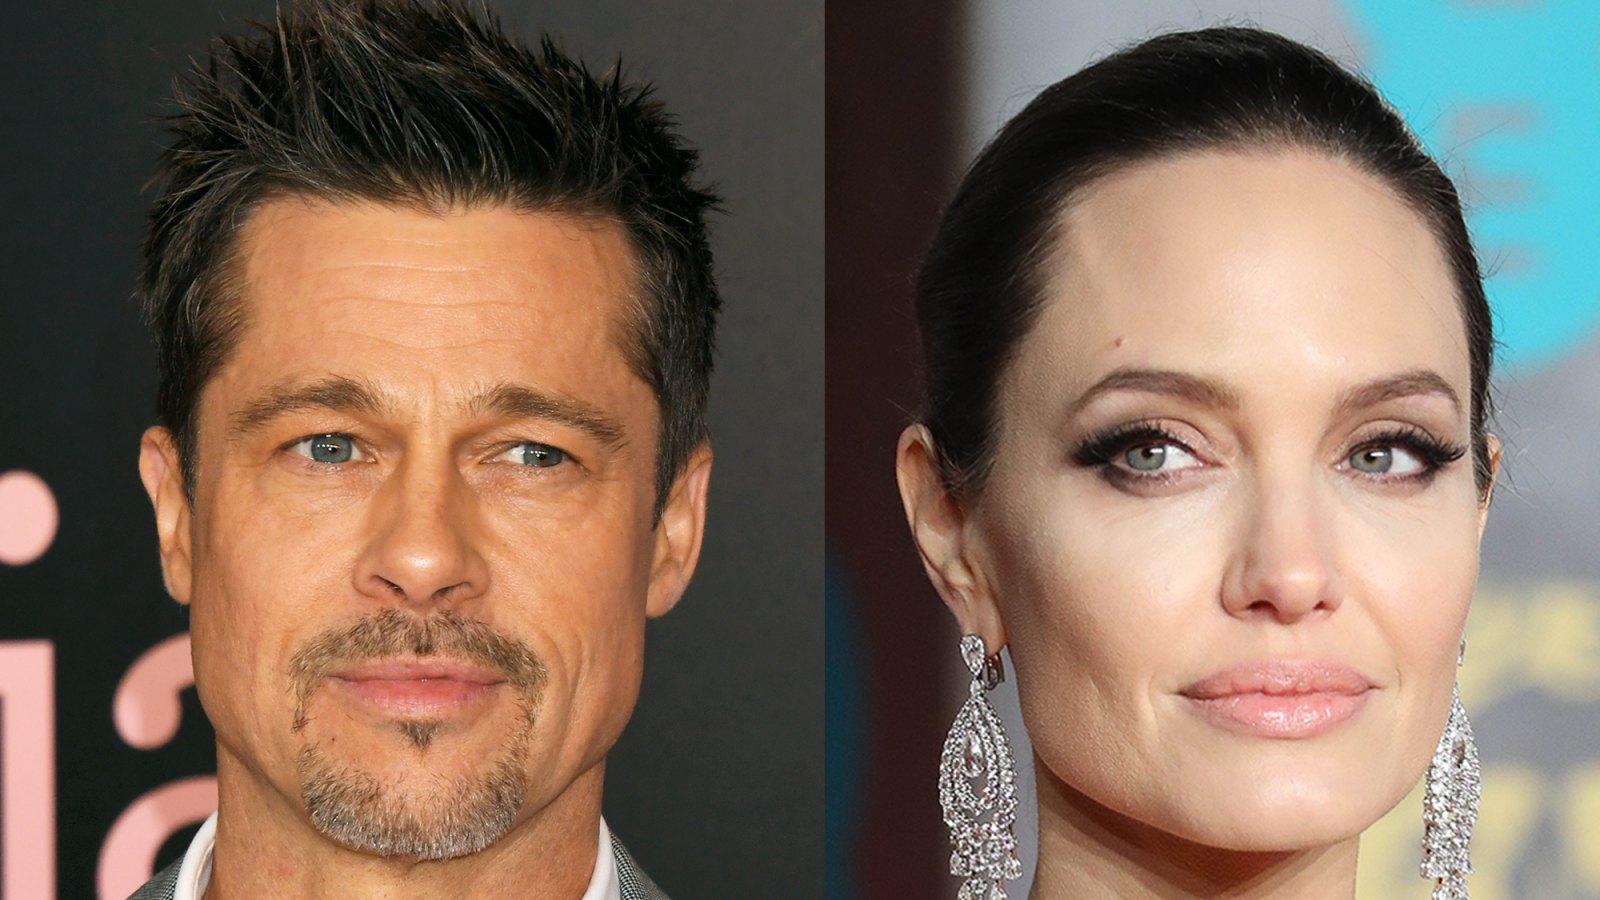 Brad Pitt and Angelina Jolie.